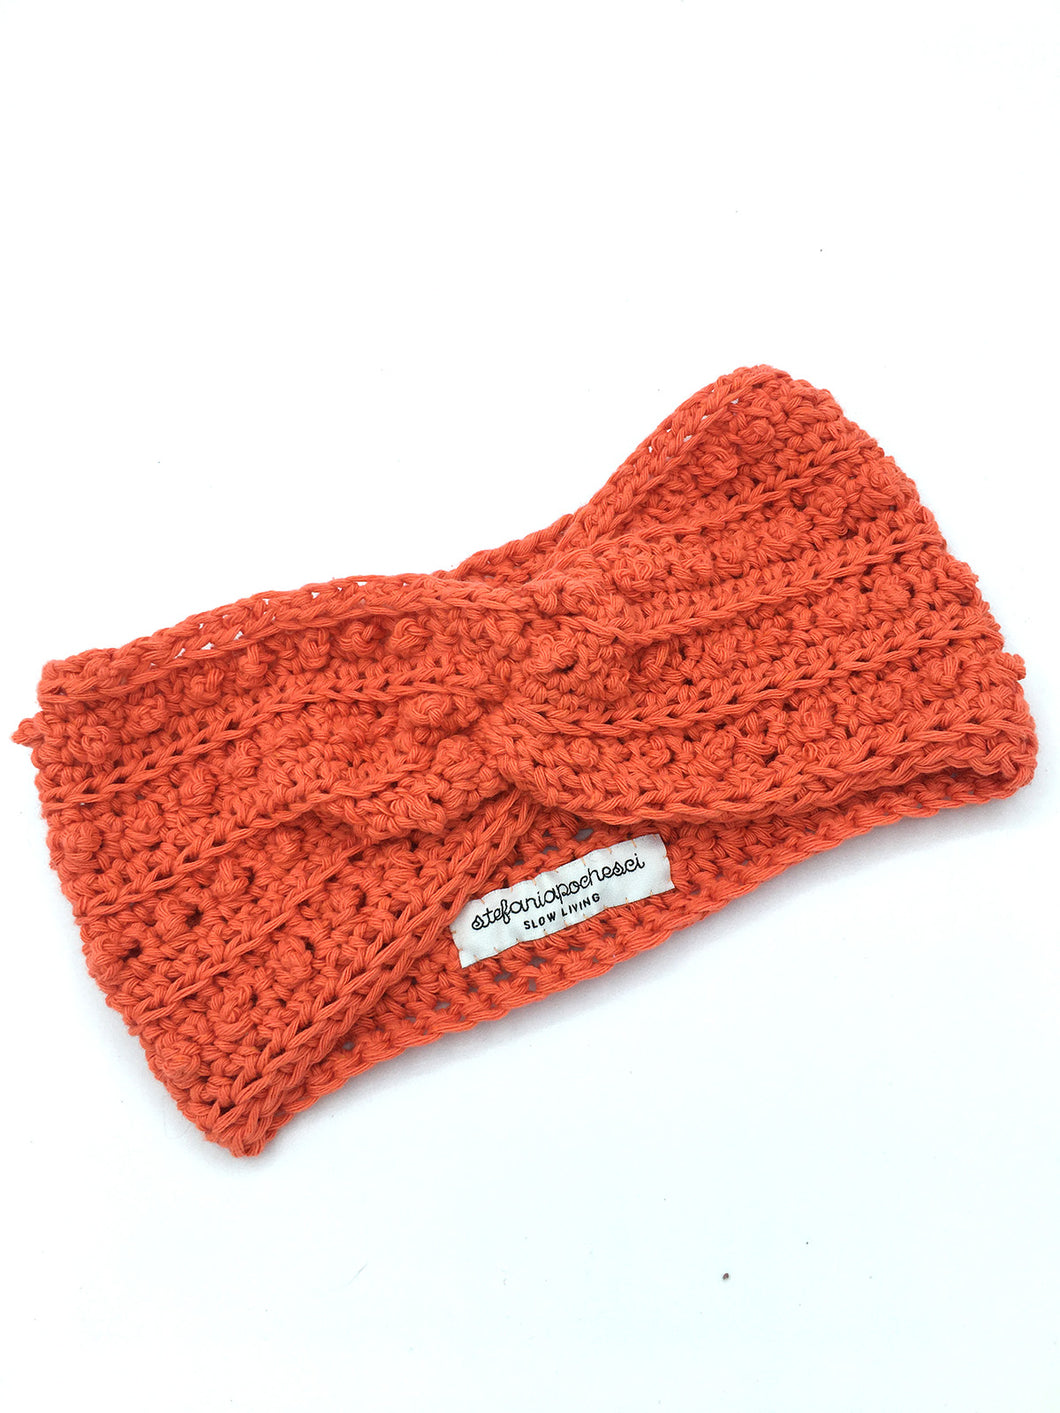 Thérèse - Crochet Boho Turban headband - Regenerated Cotton